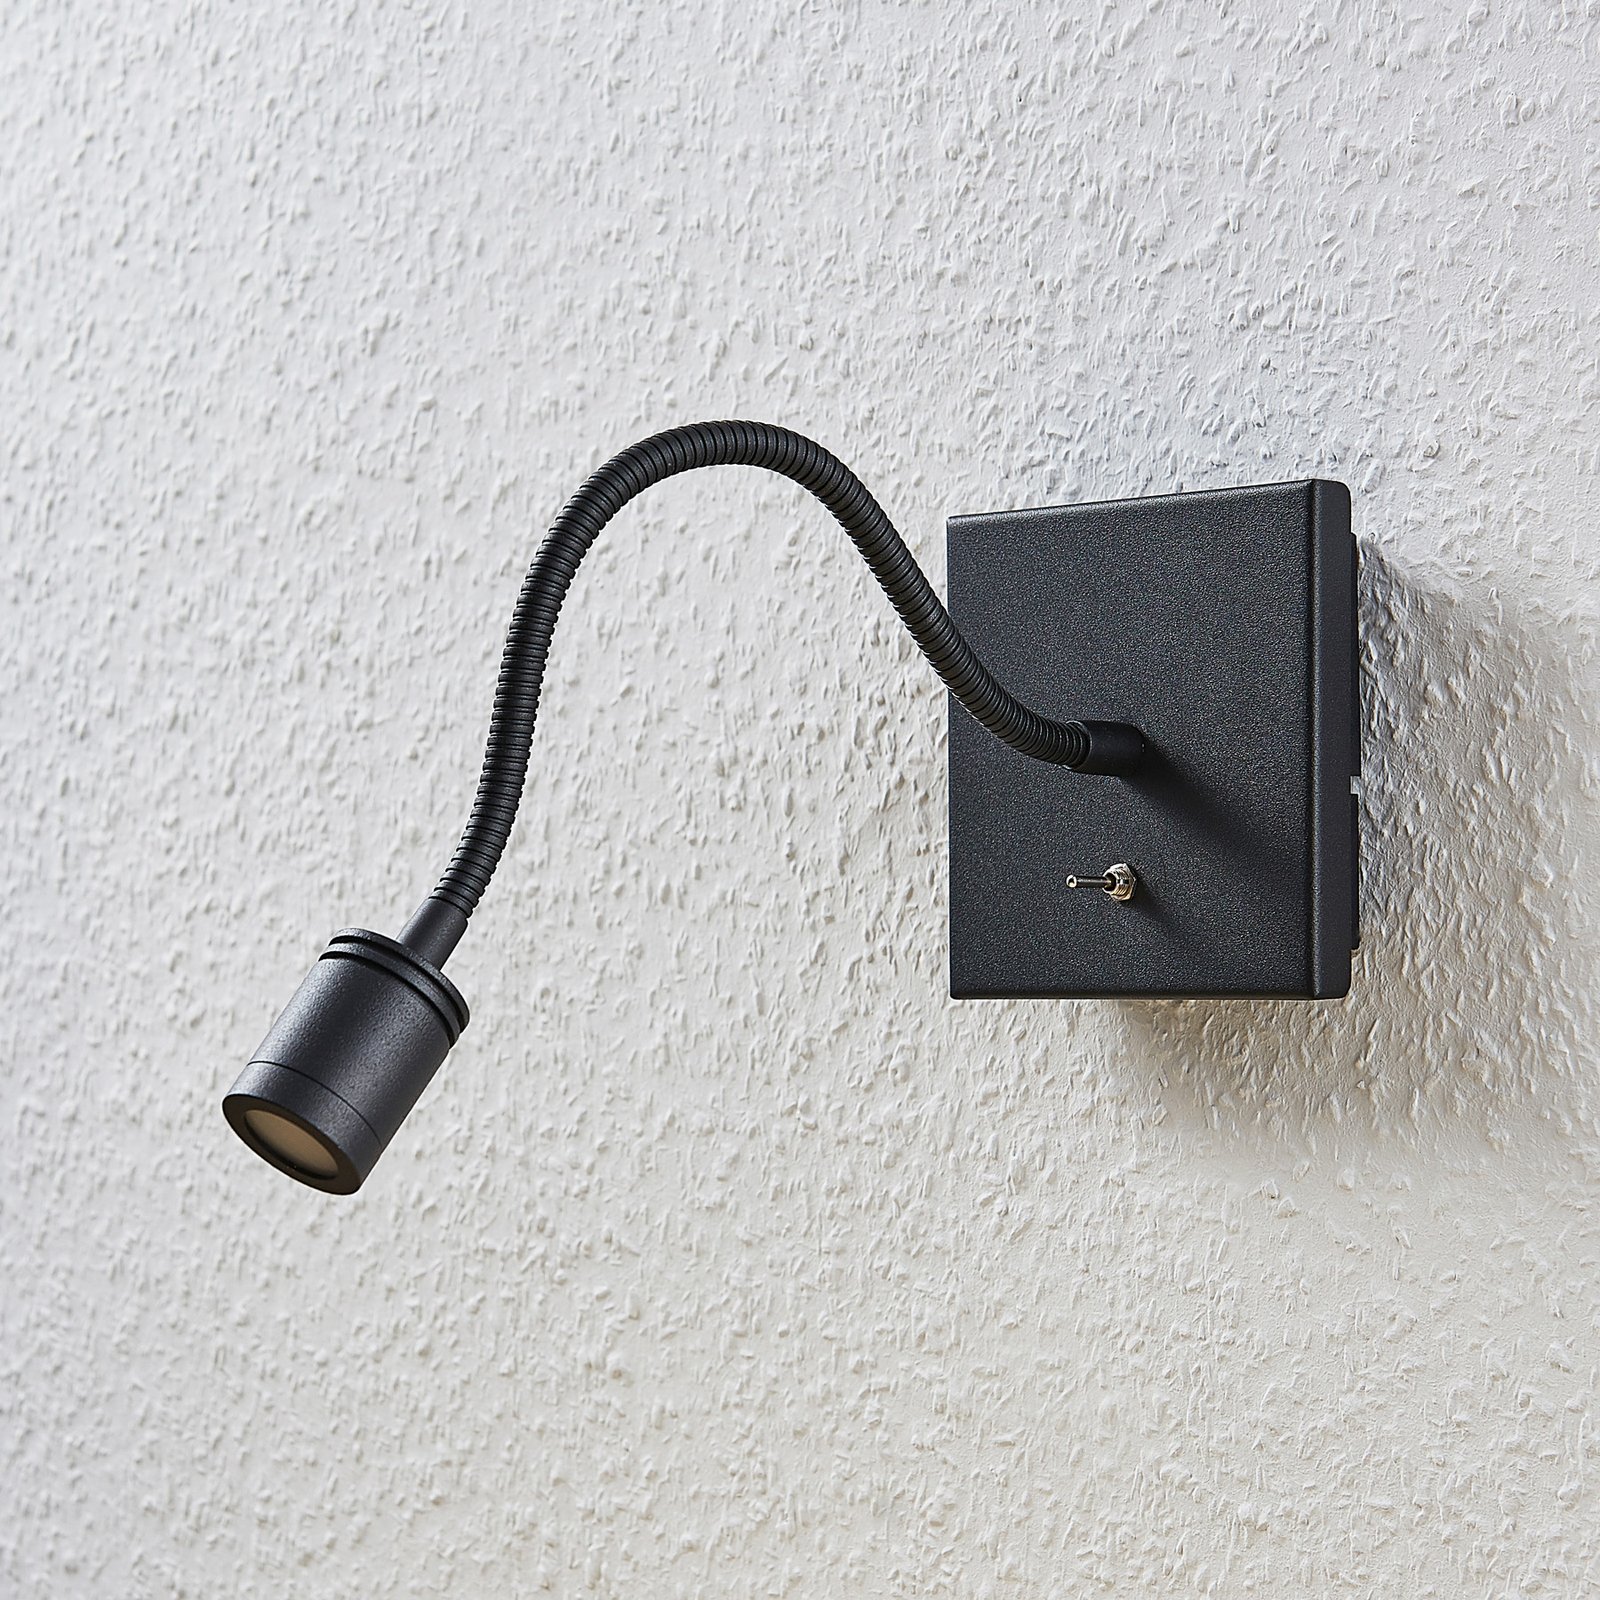 LED wall light Mayar with flex arm, black set of 2